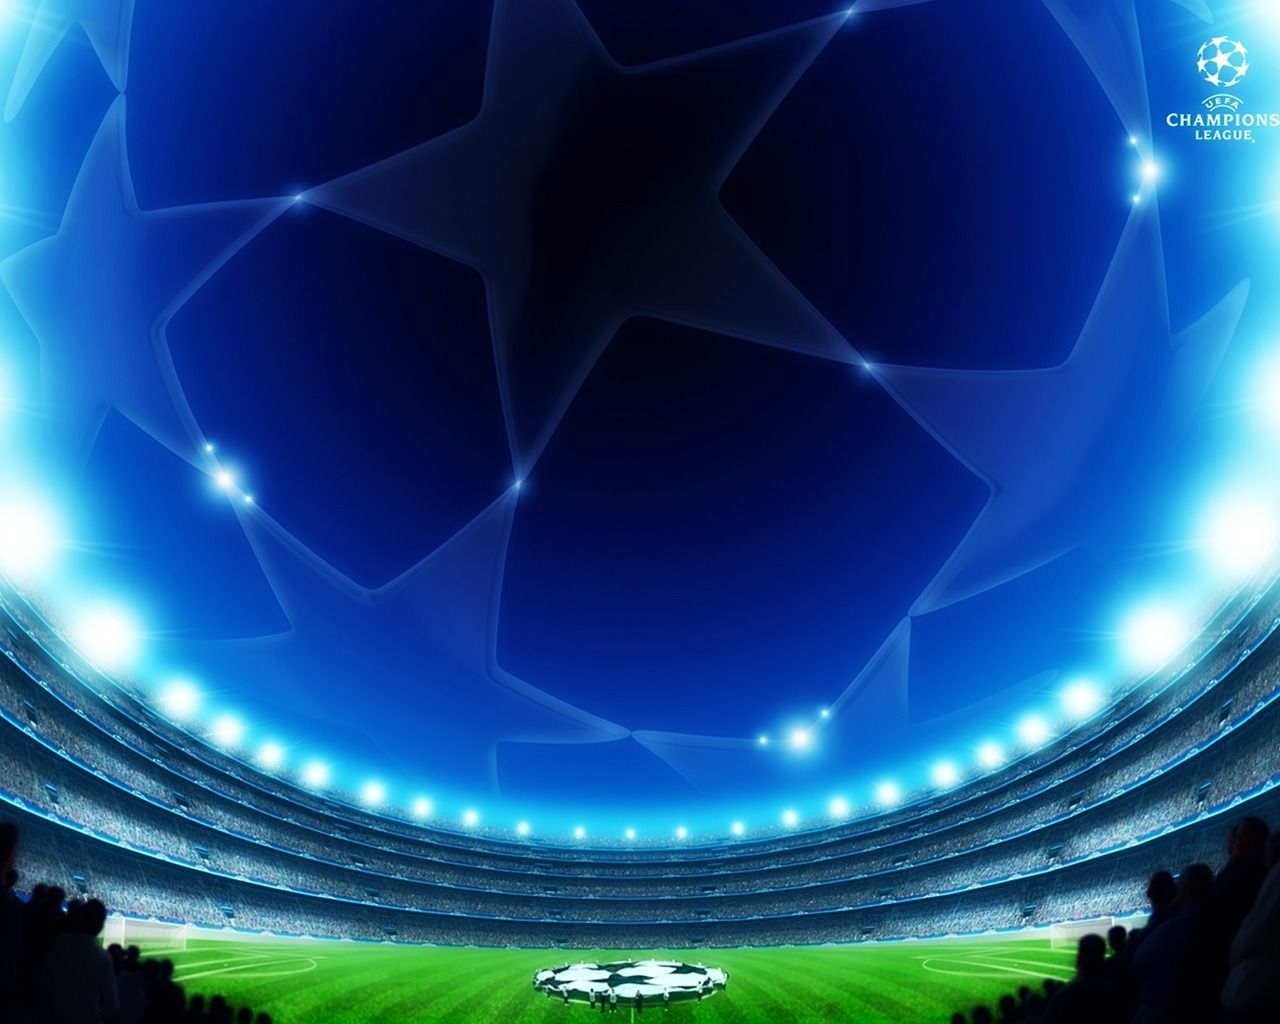 Uefa champions league wallpaper football sports wallpaper 1280 1024 1689